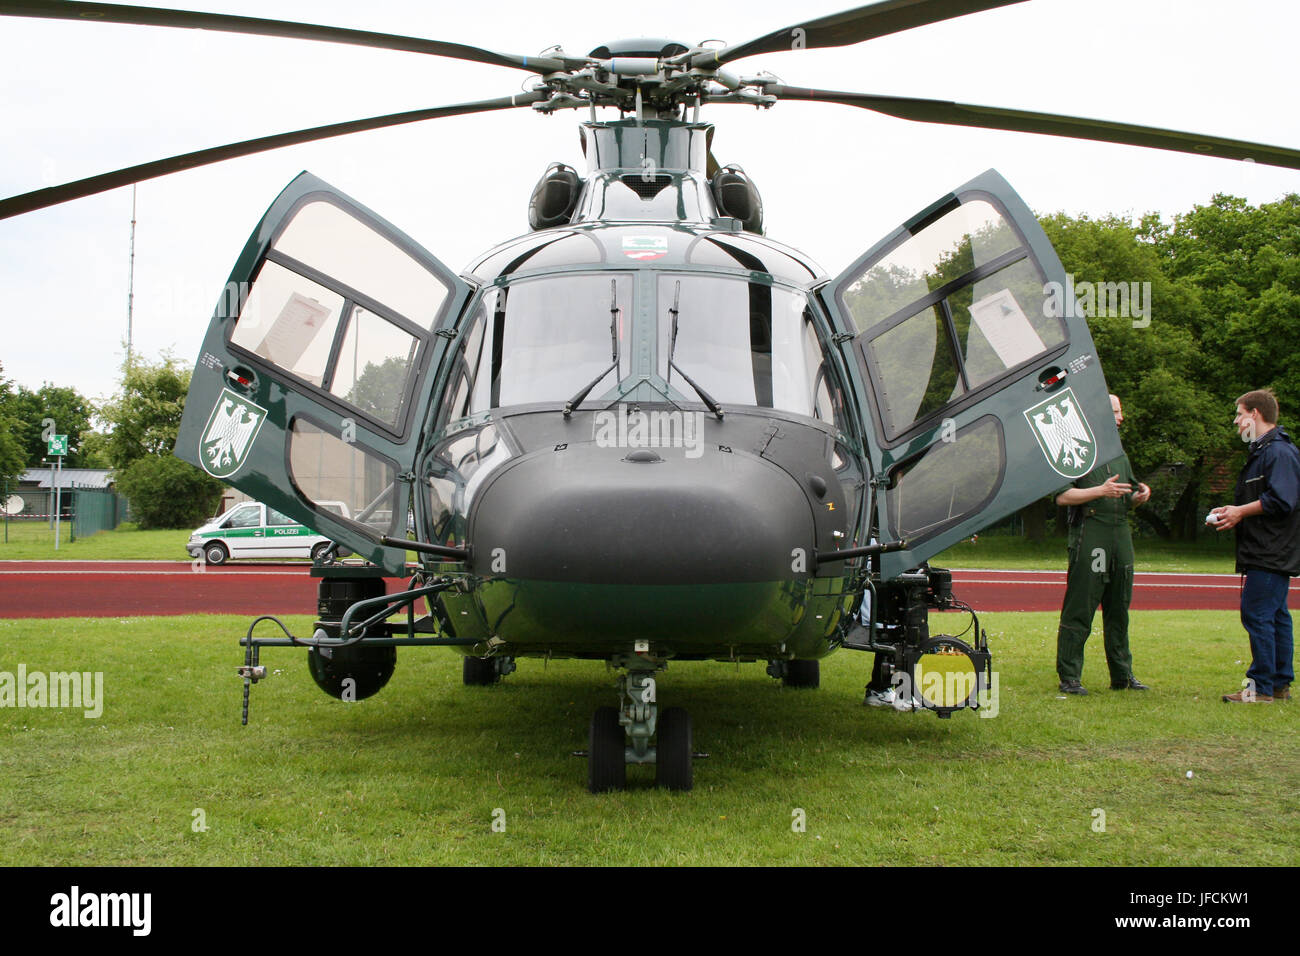 BONN, GERMANY - MAY 22: German Border patrol EC-155 helicopter on display during the Bundesgrenzschutz open house at Bonn-Hangelar airport, May 22, 20 Stock Photo